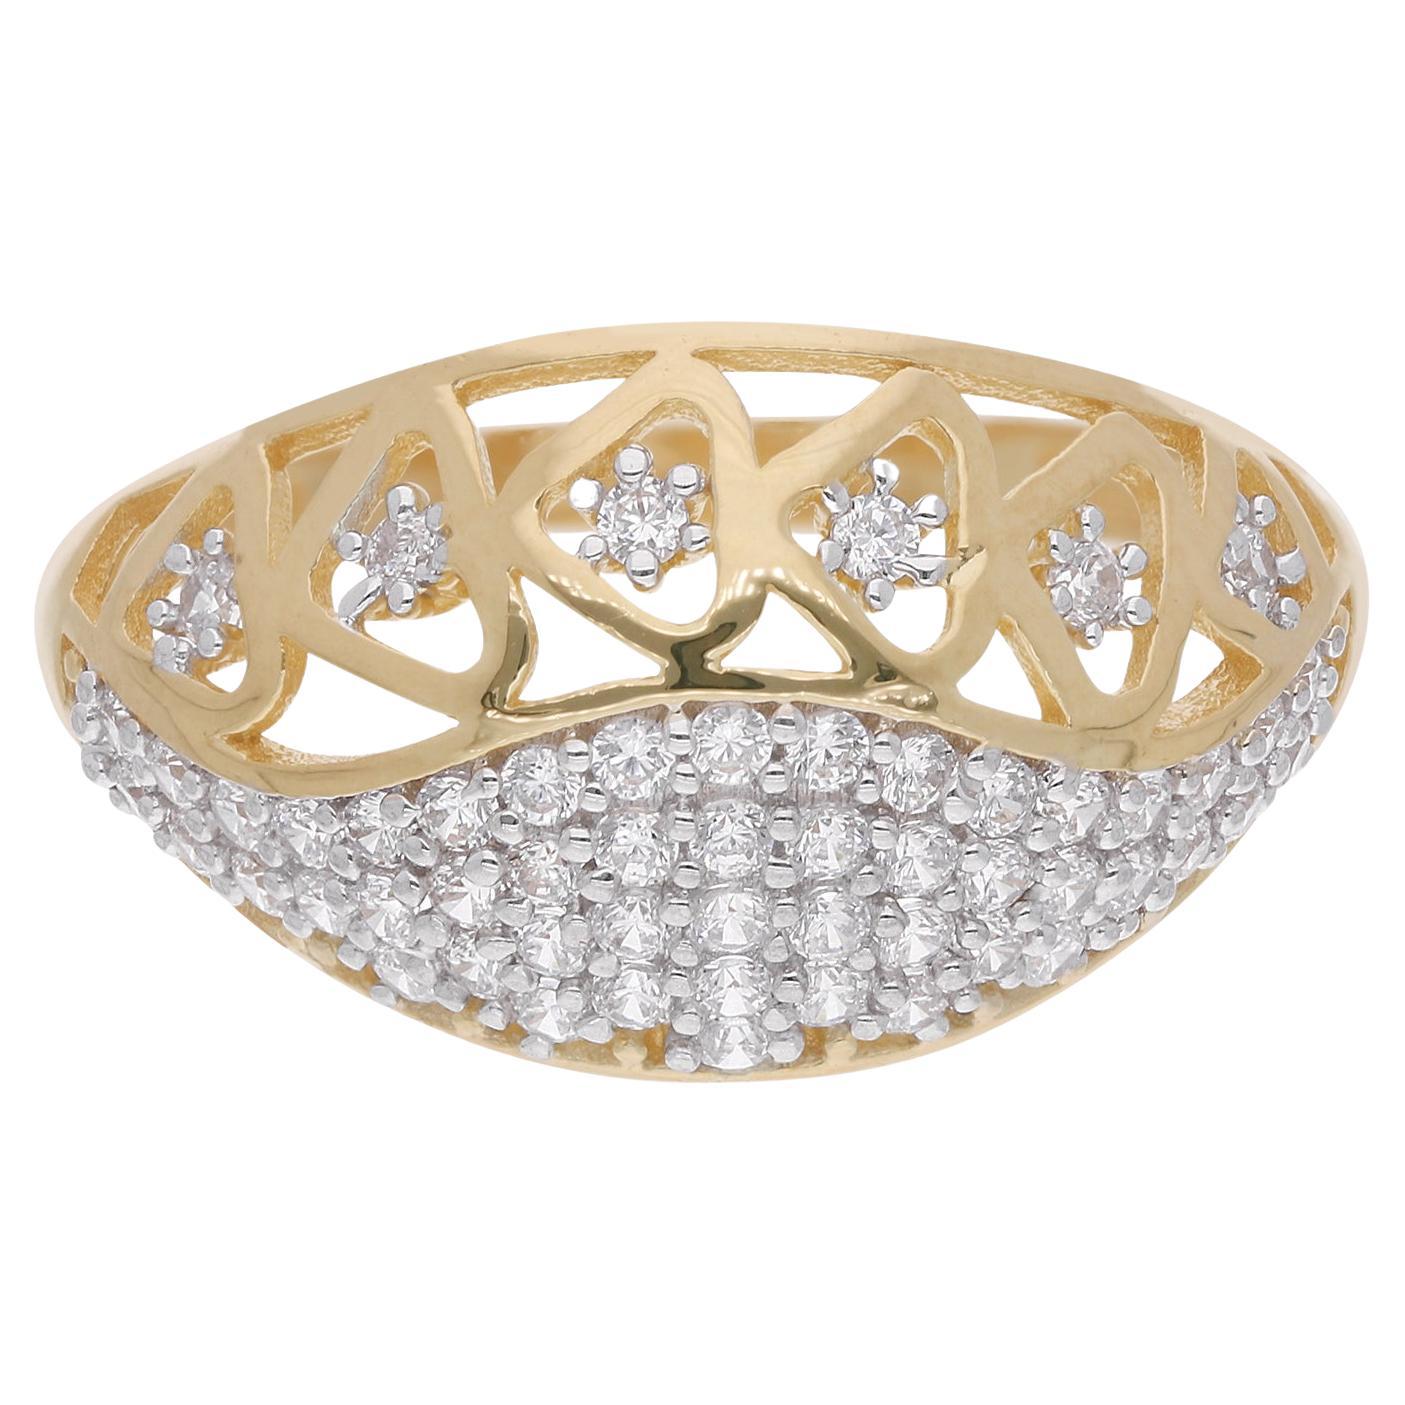 Natural 1 Carat Diamond Dome Ring 18 Karat Yellow Gold Handmade Fine Jewelry